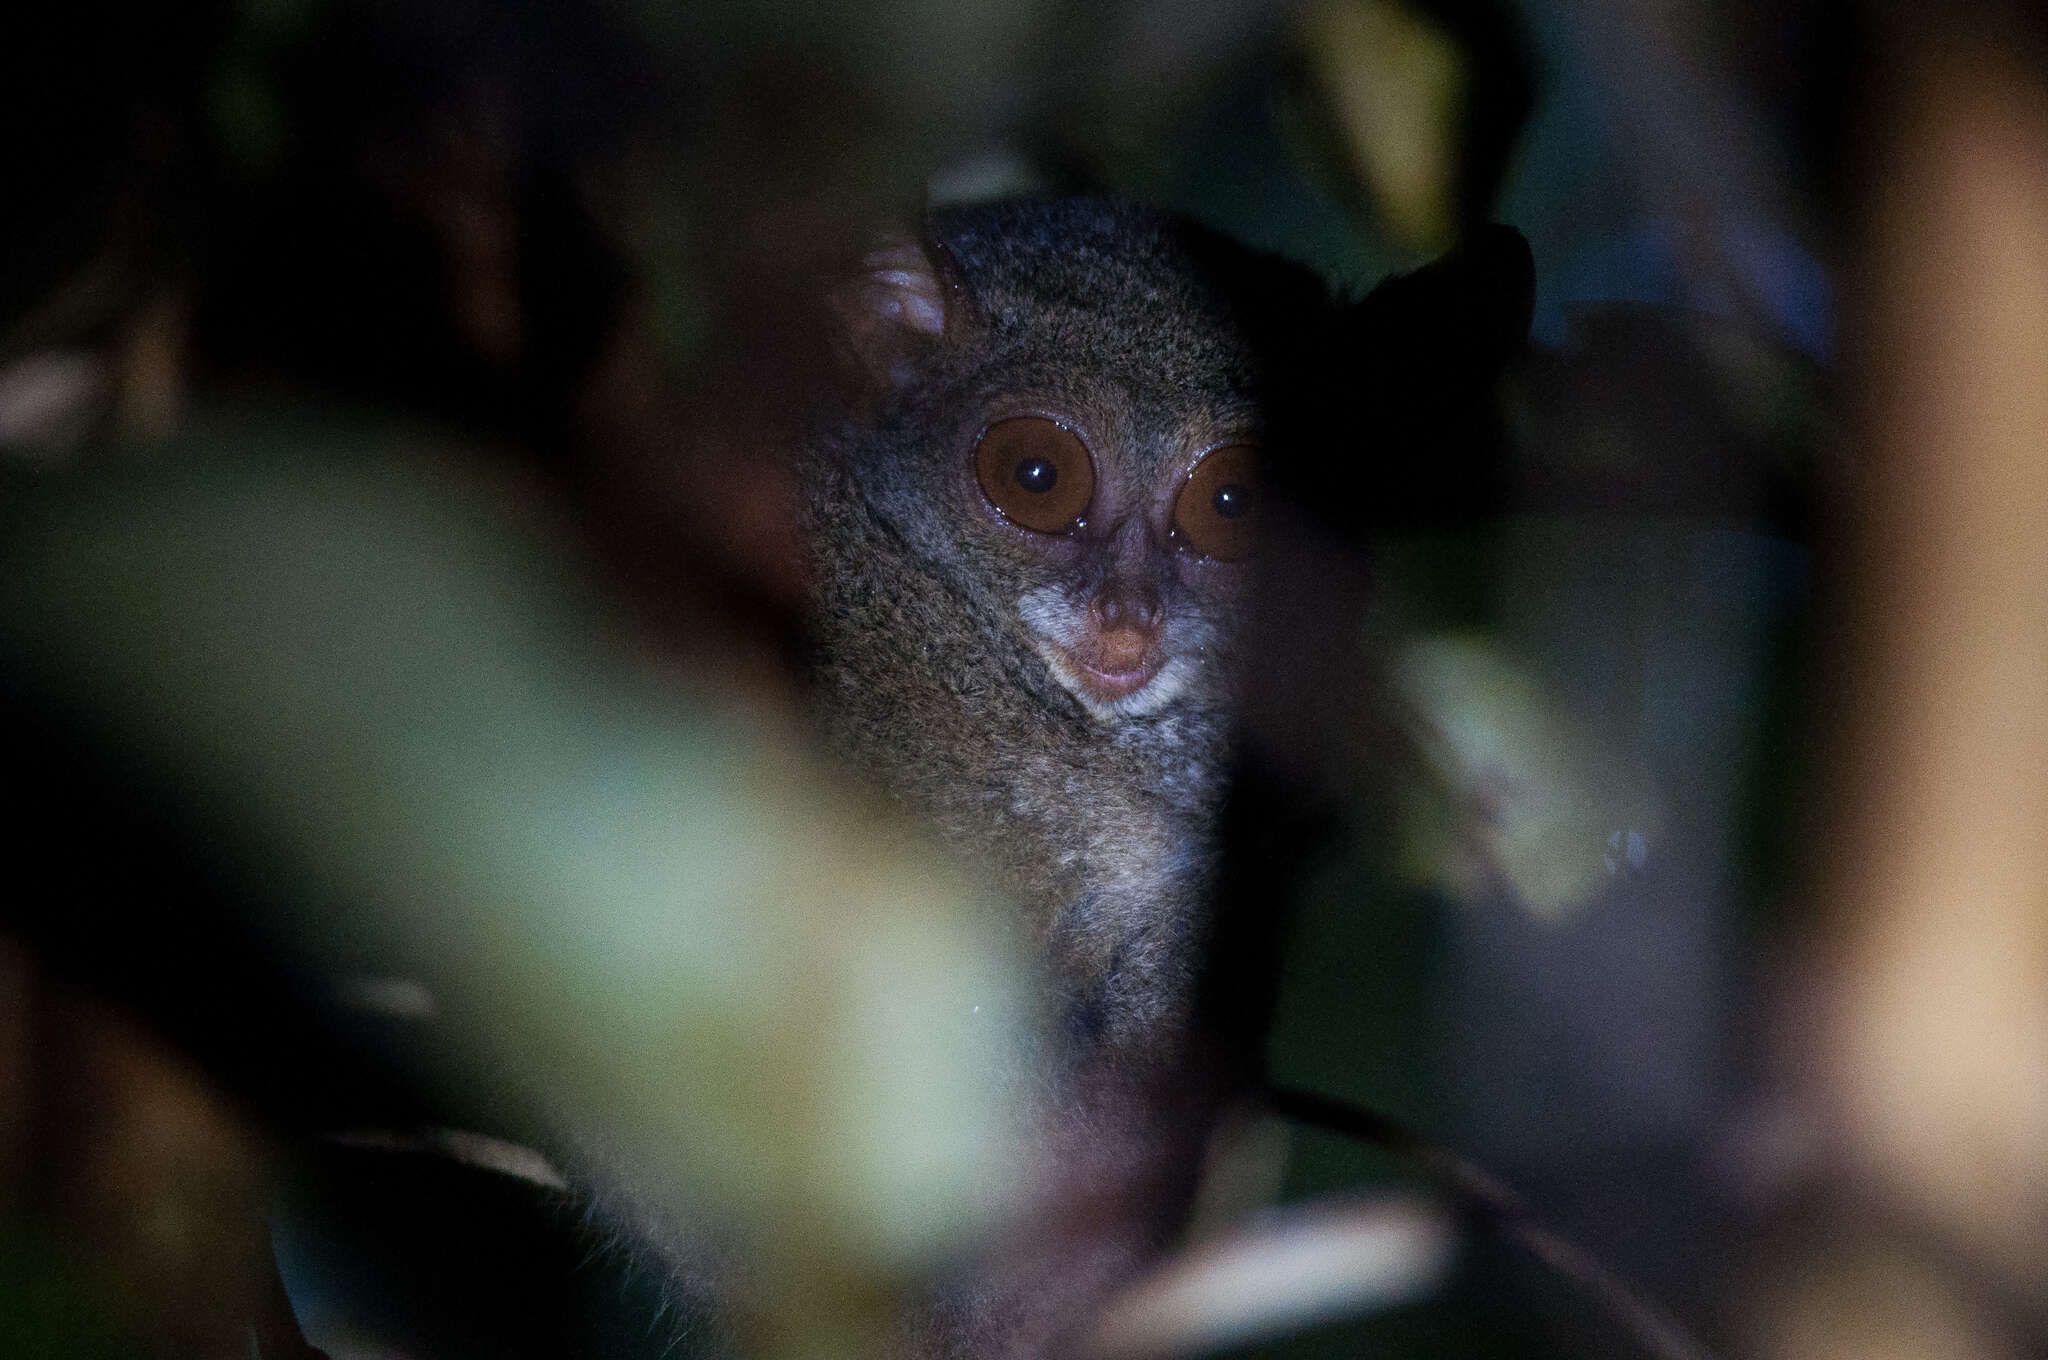 Image of Peleng Island tarsier